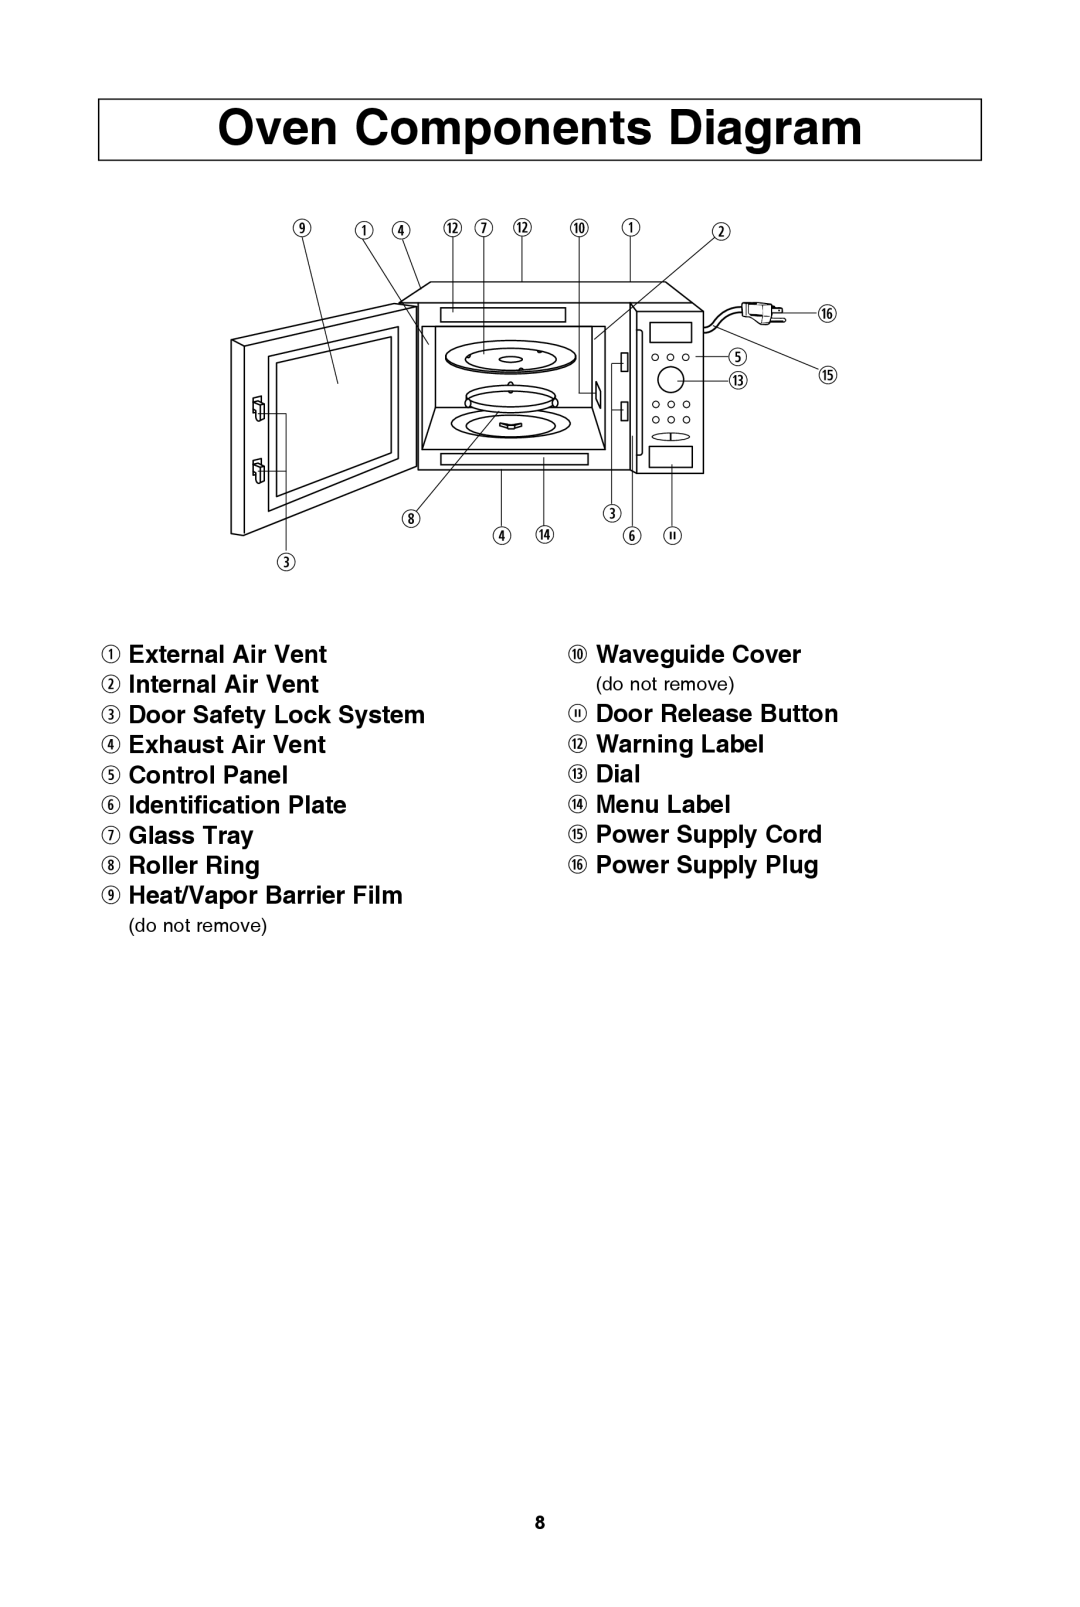 Panasonic NN-SD972S, NN-SD962S oven components diagram, q external air vent w internal air vent, o heat/vapor barrier film 